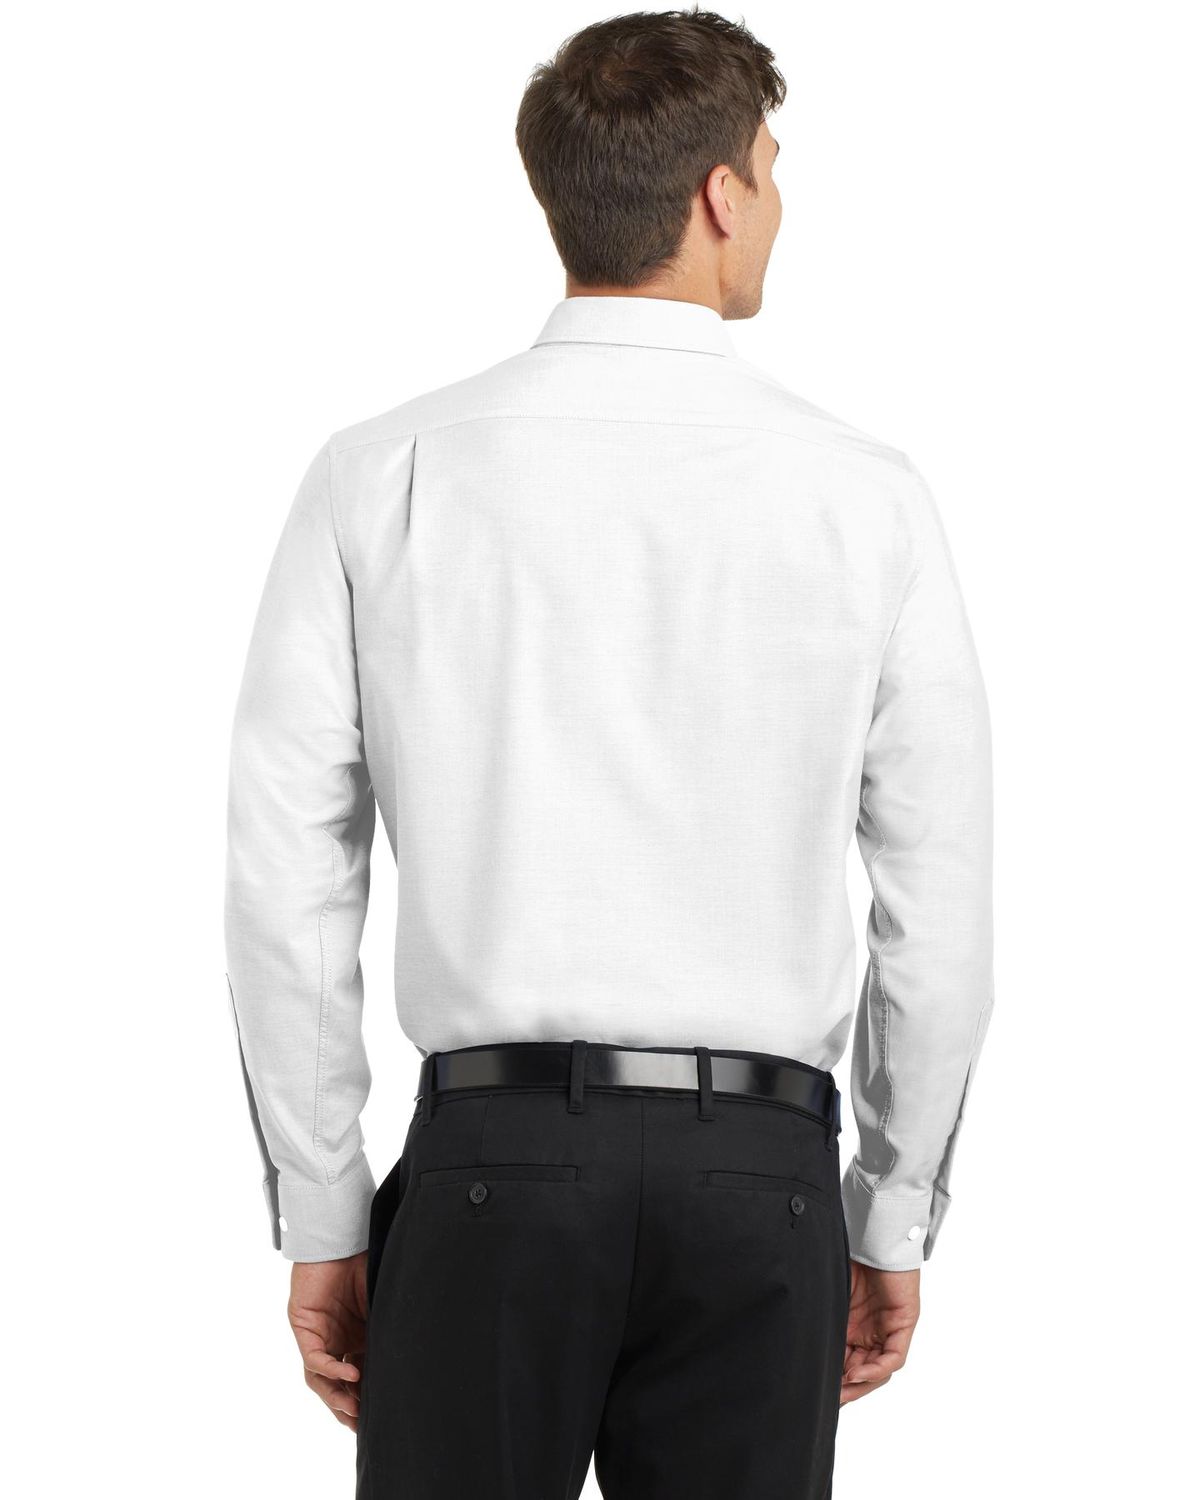 Port Authority Short Sleeve SuperPro Oxford Shirt-4XL (White) 